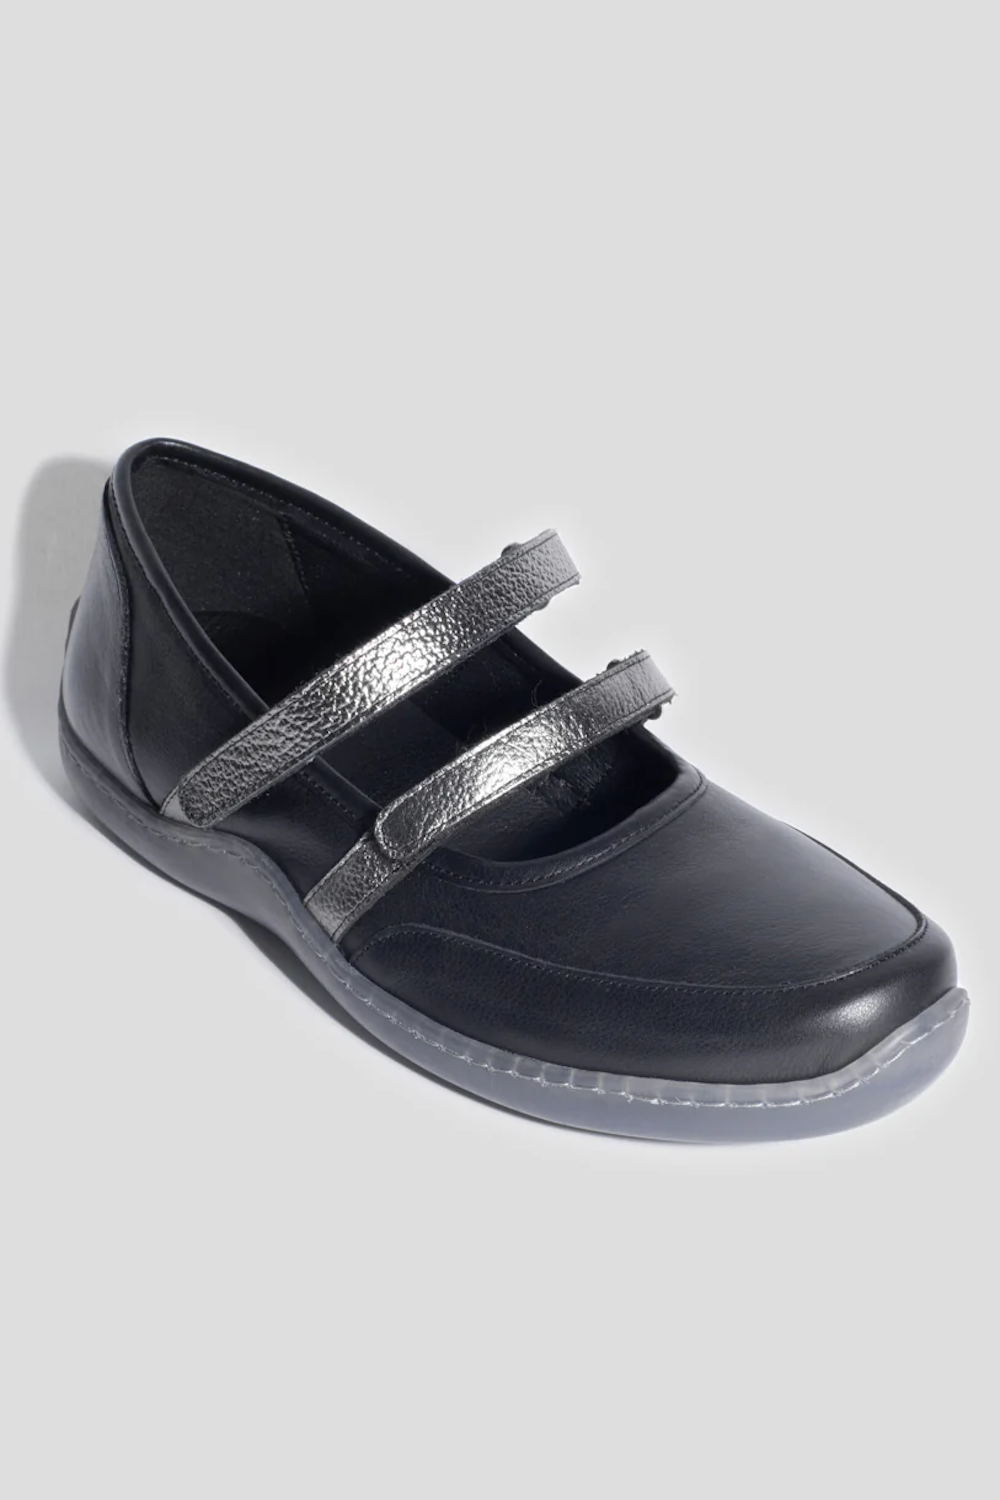 002KM Sandals| Black